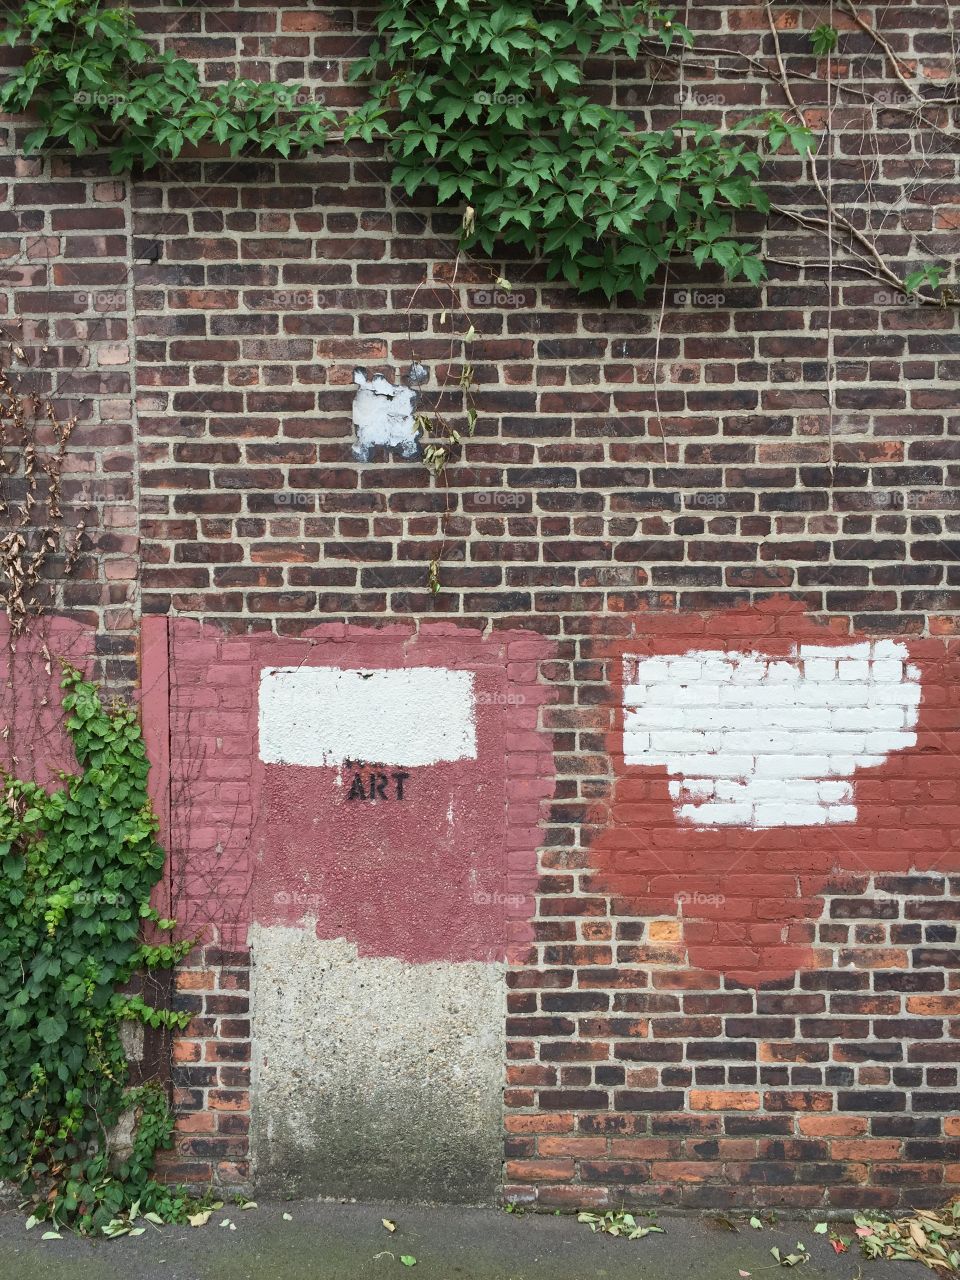 Art wall brick and paint